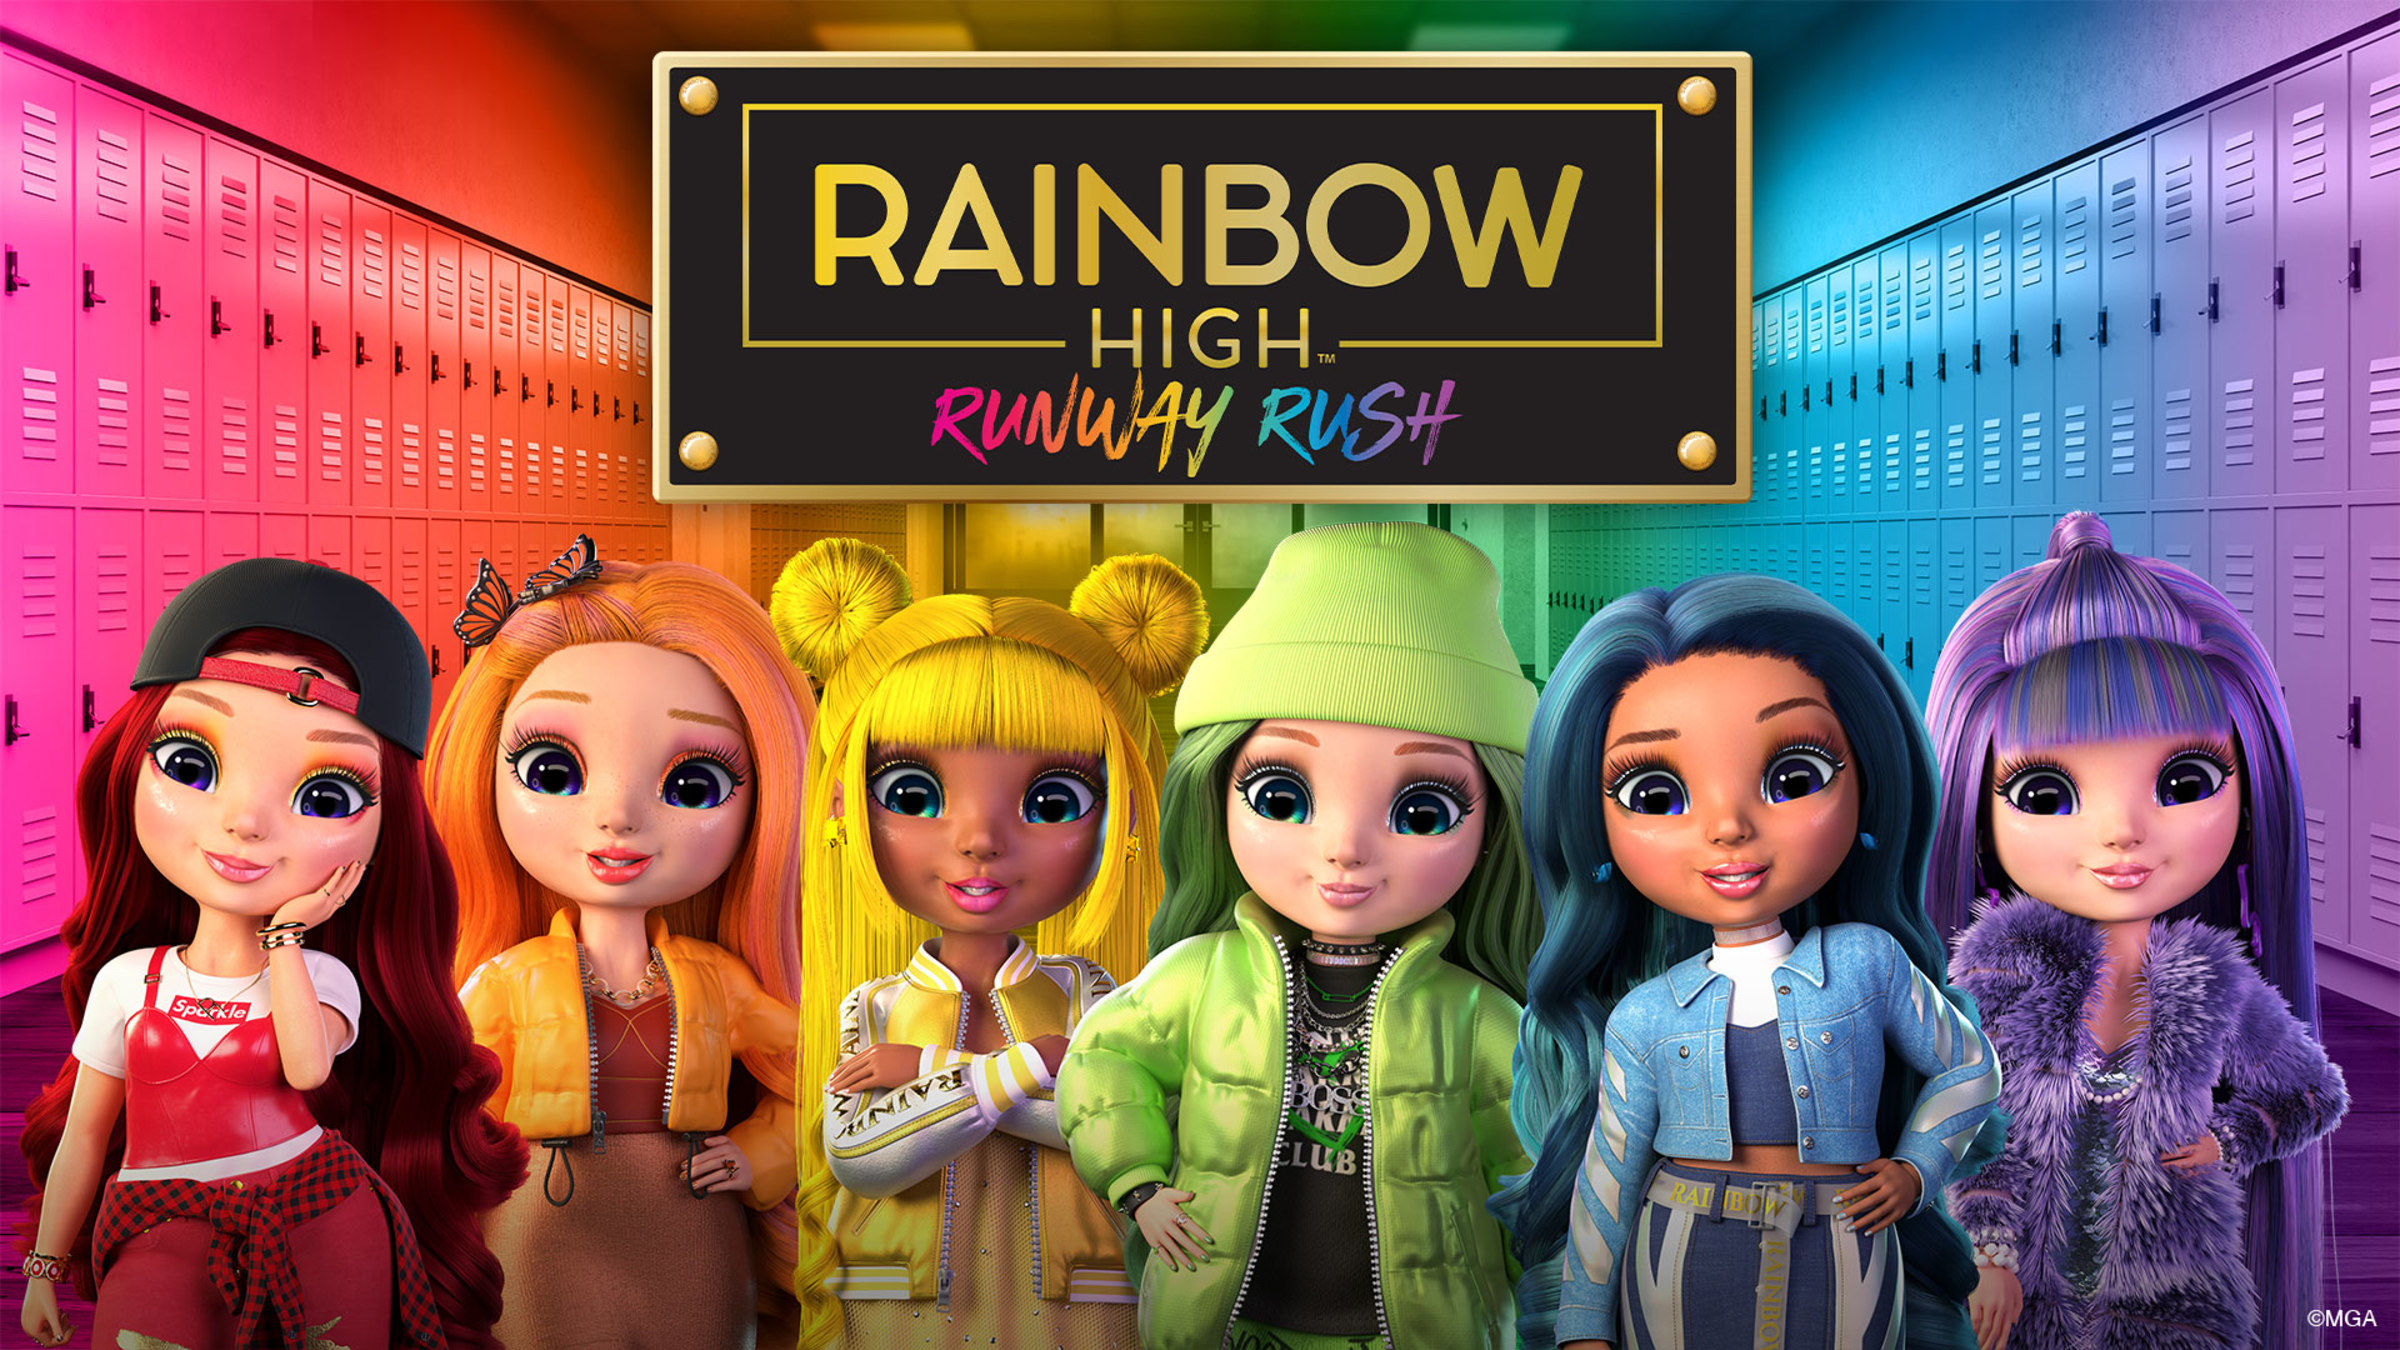 Amaya puzzle with rainbow high - online puzzle